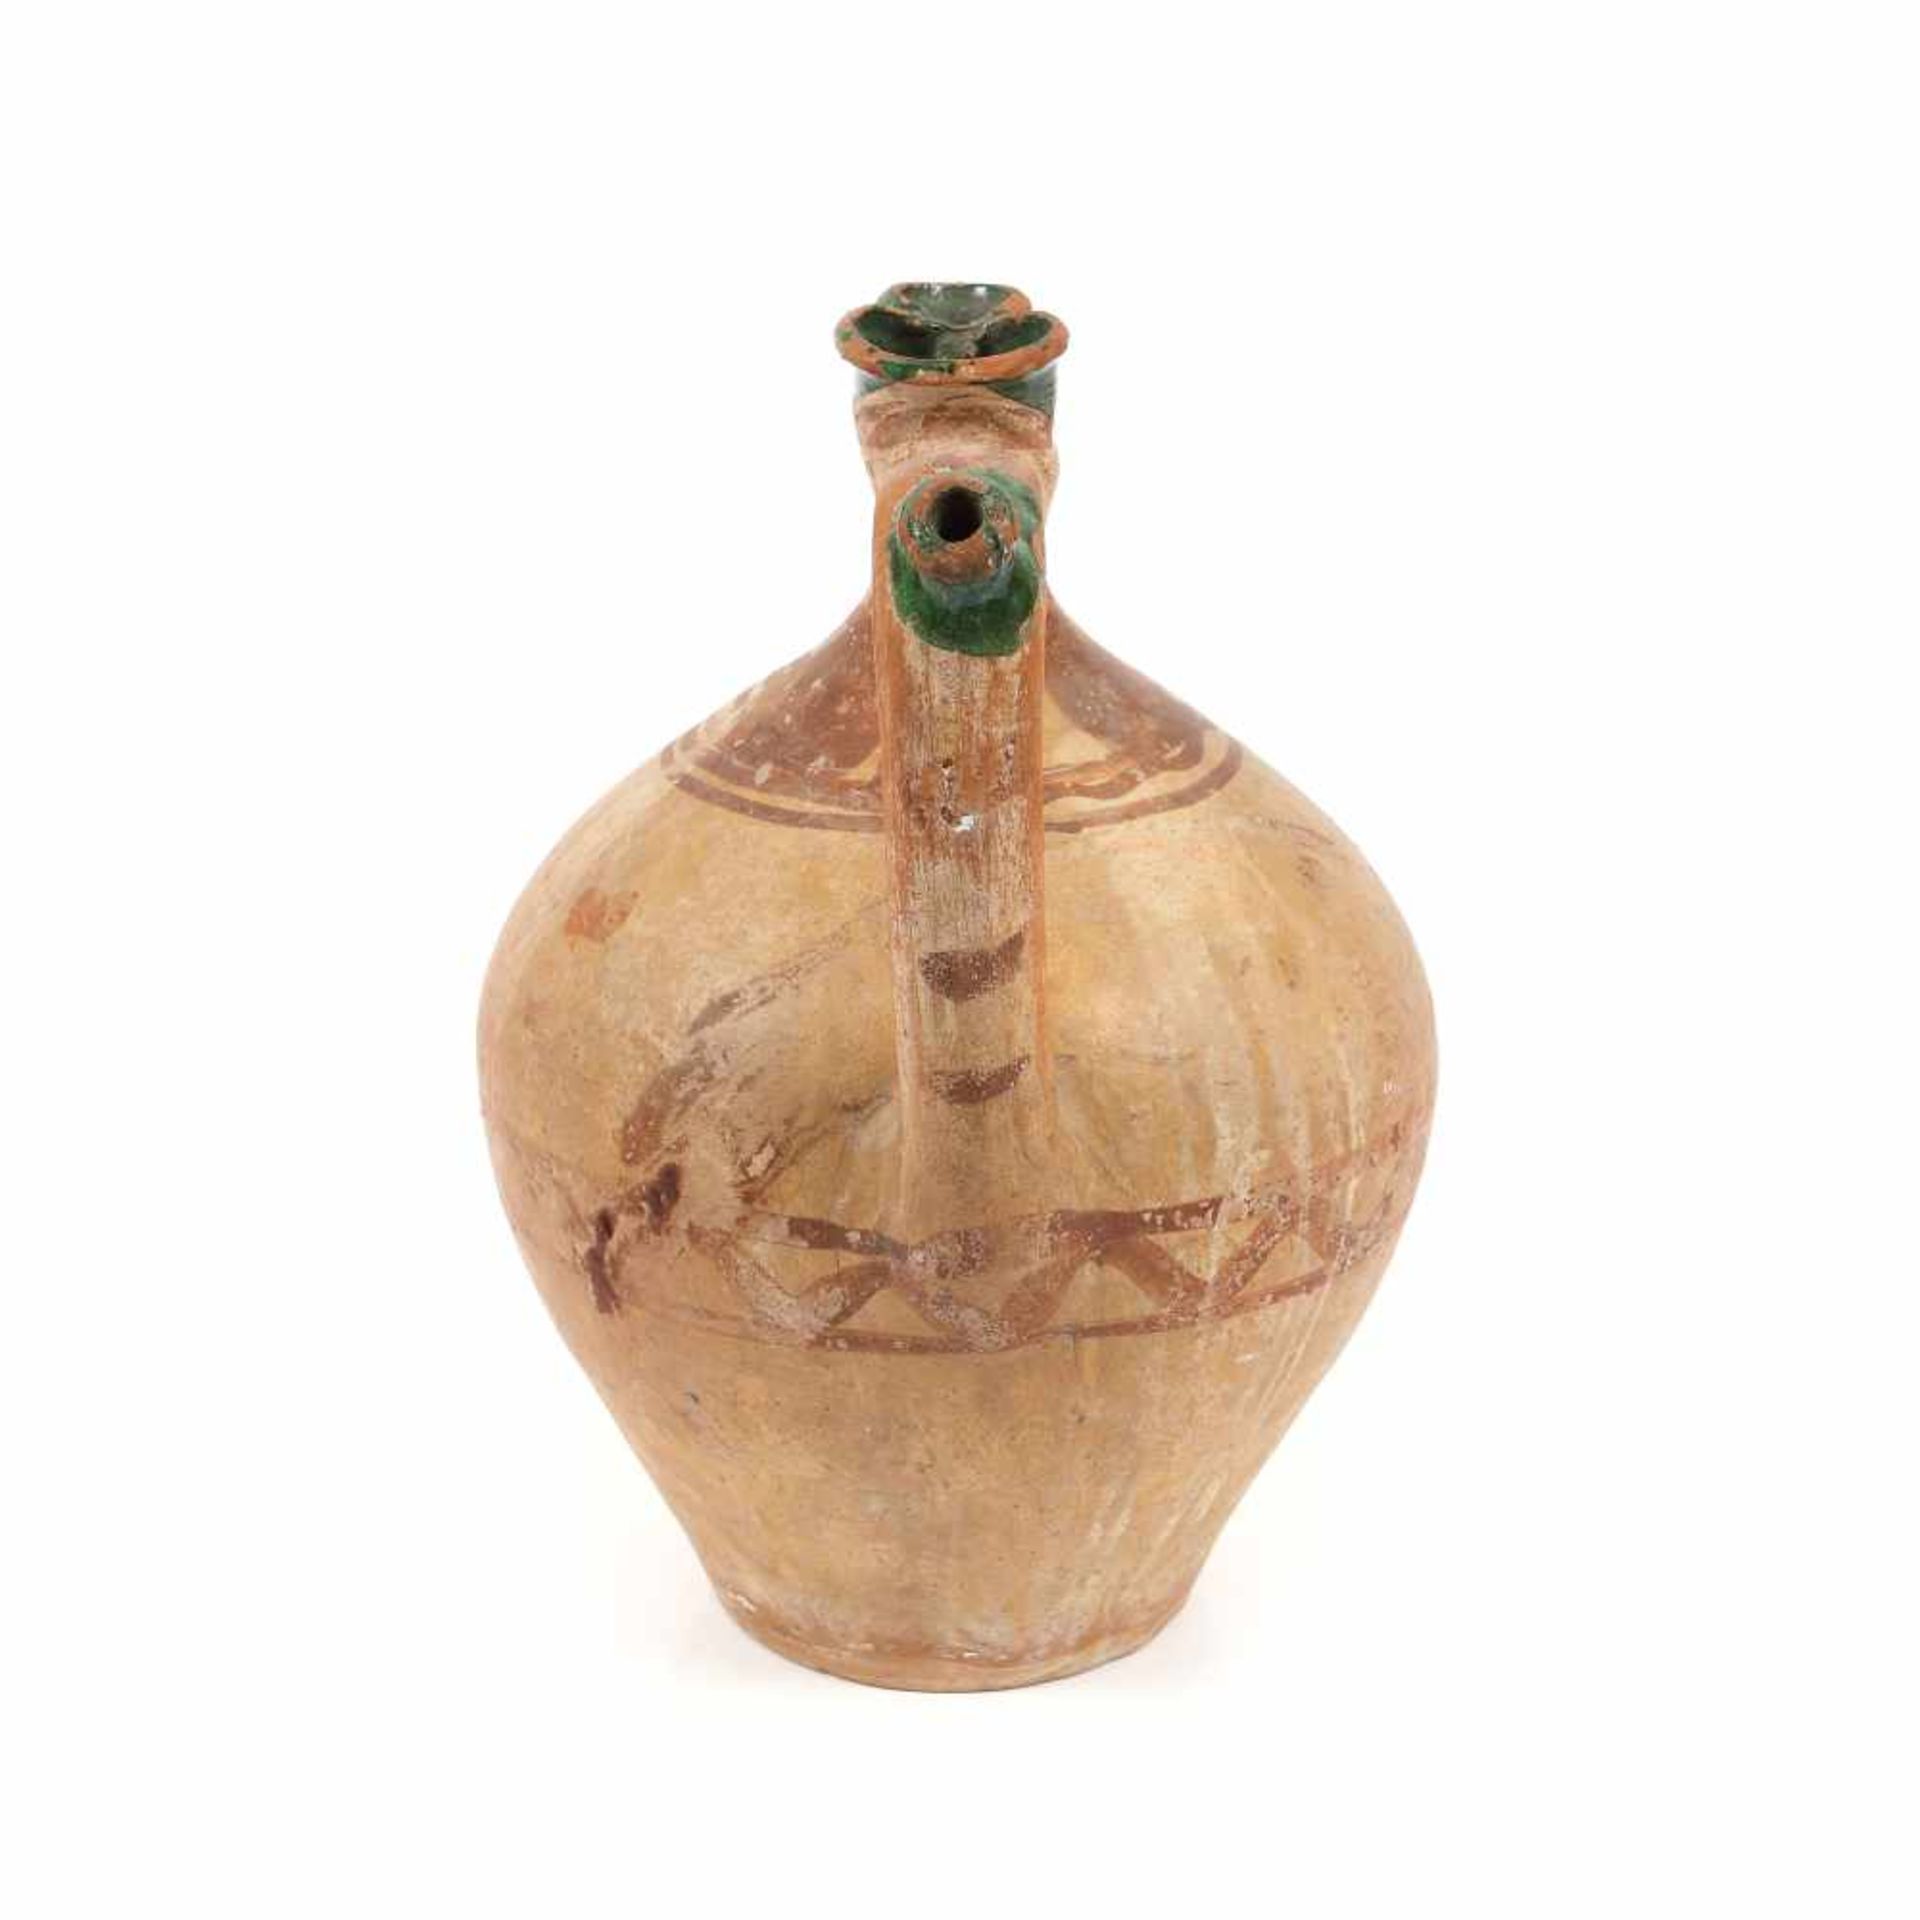 Godfather wine jug, Tășnad, Bihor, late 19th century, rarity - Image 3 of 4